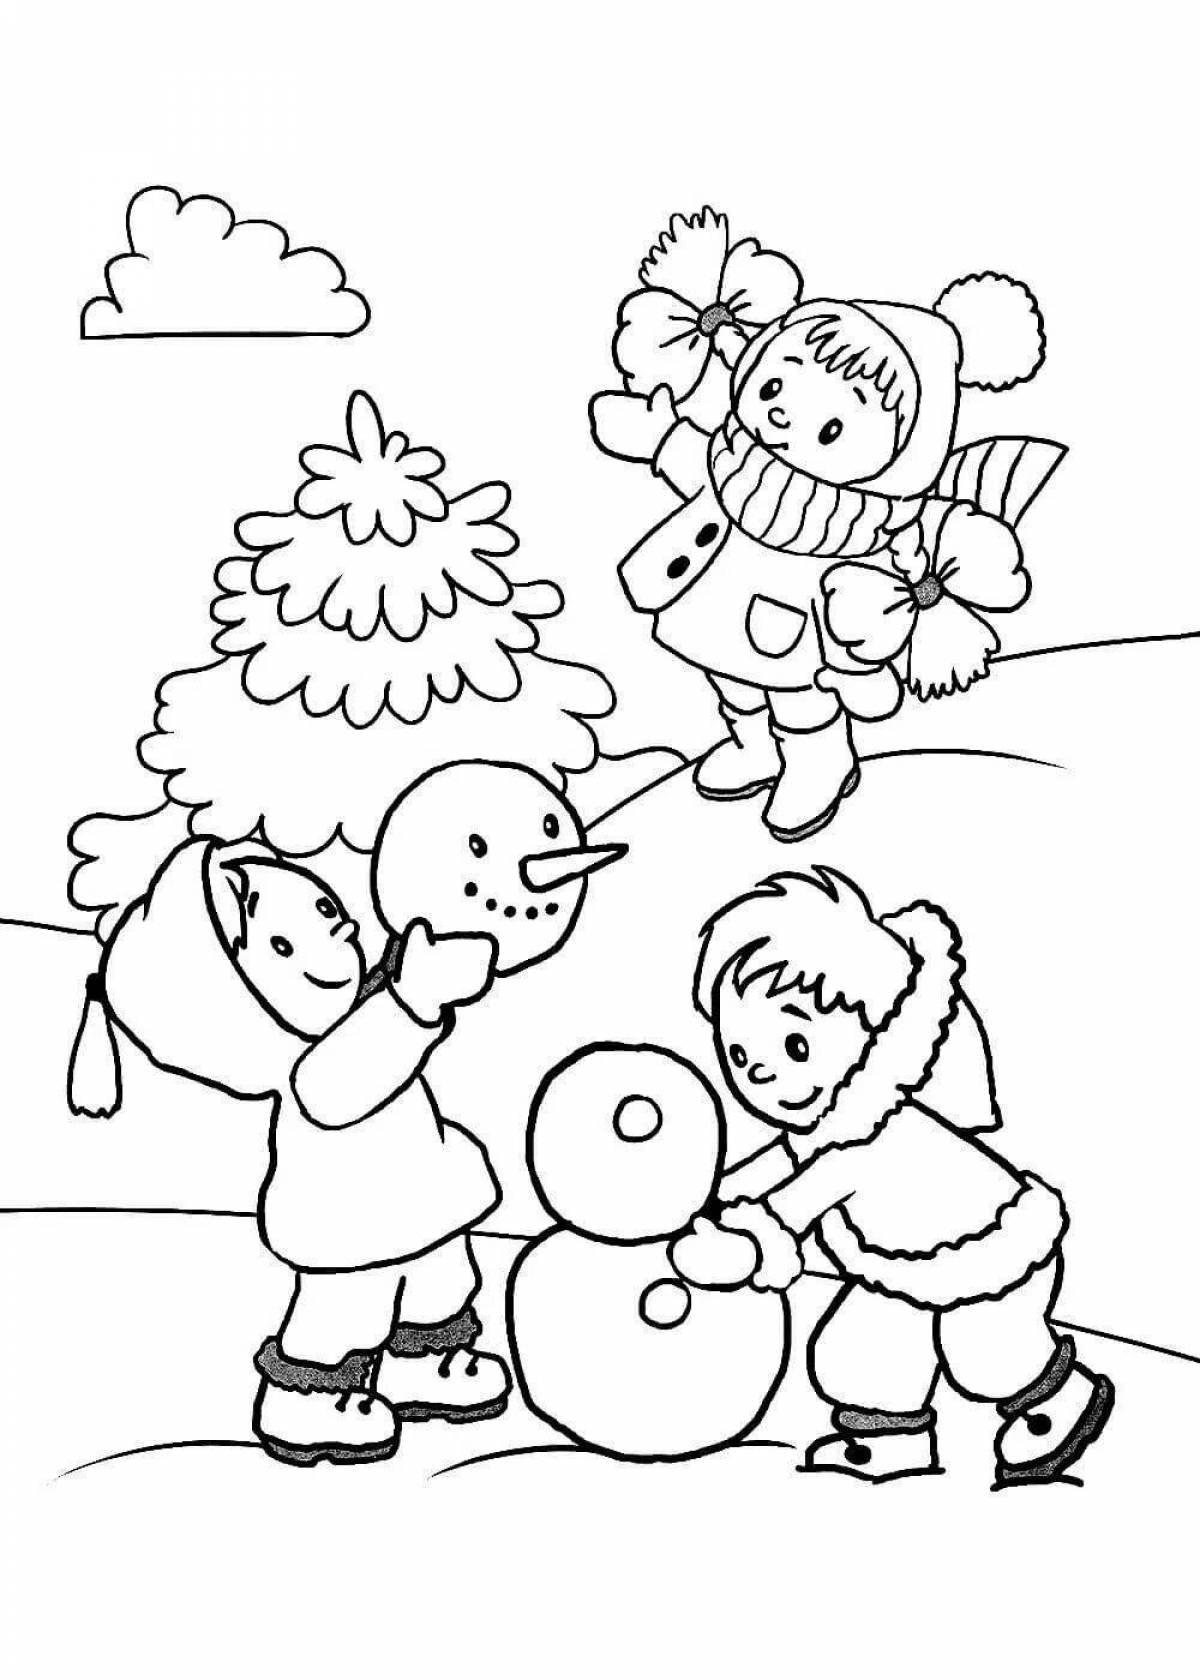 Commemorative winter games coloring book